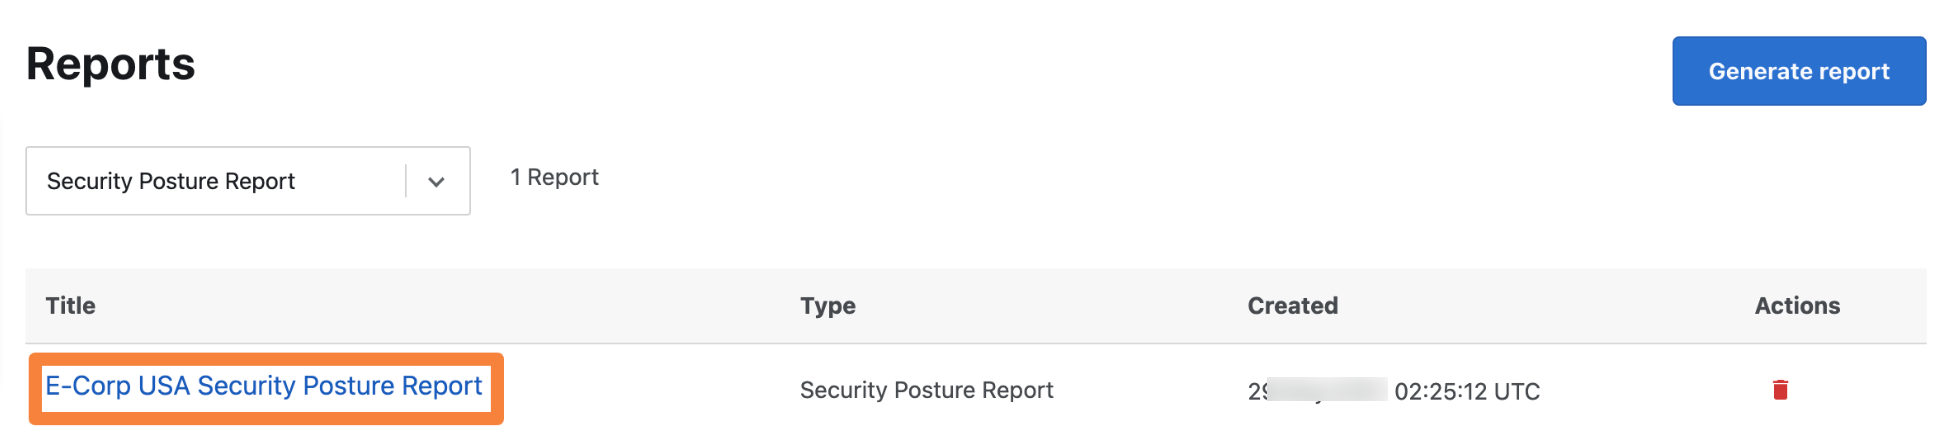 security posture report link